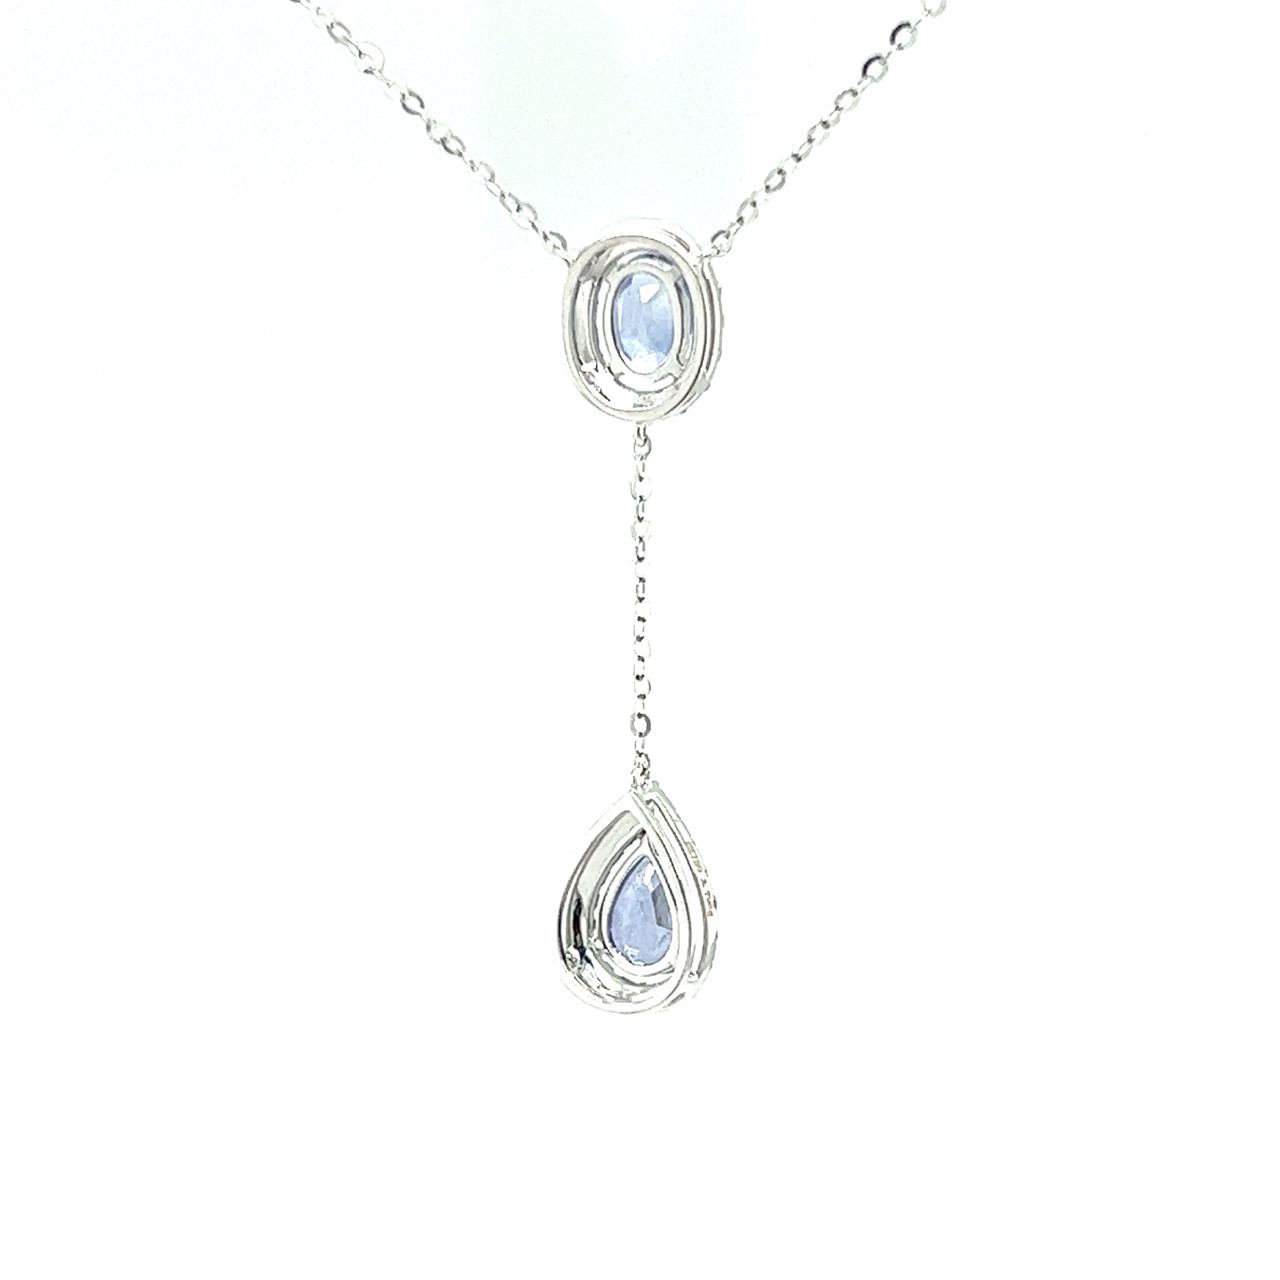 18K White Gold Blue Sap Lariat Diamond Necklace